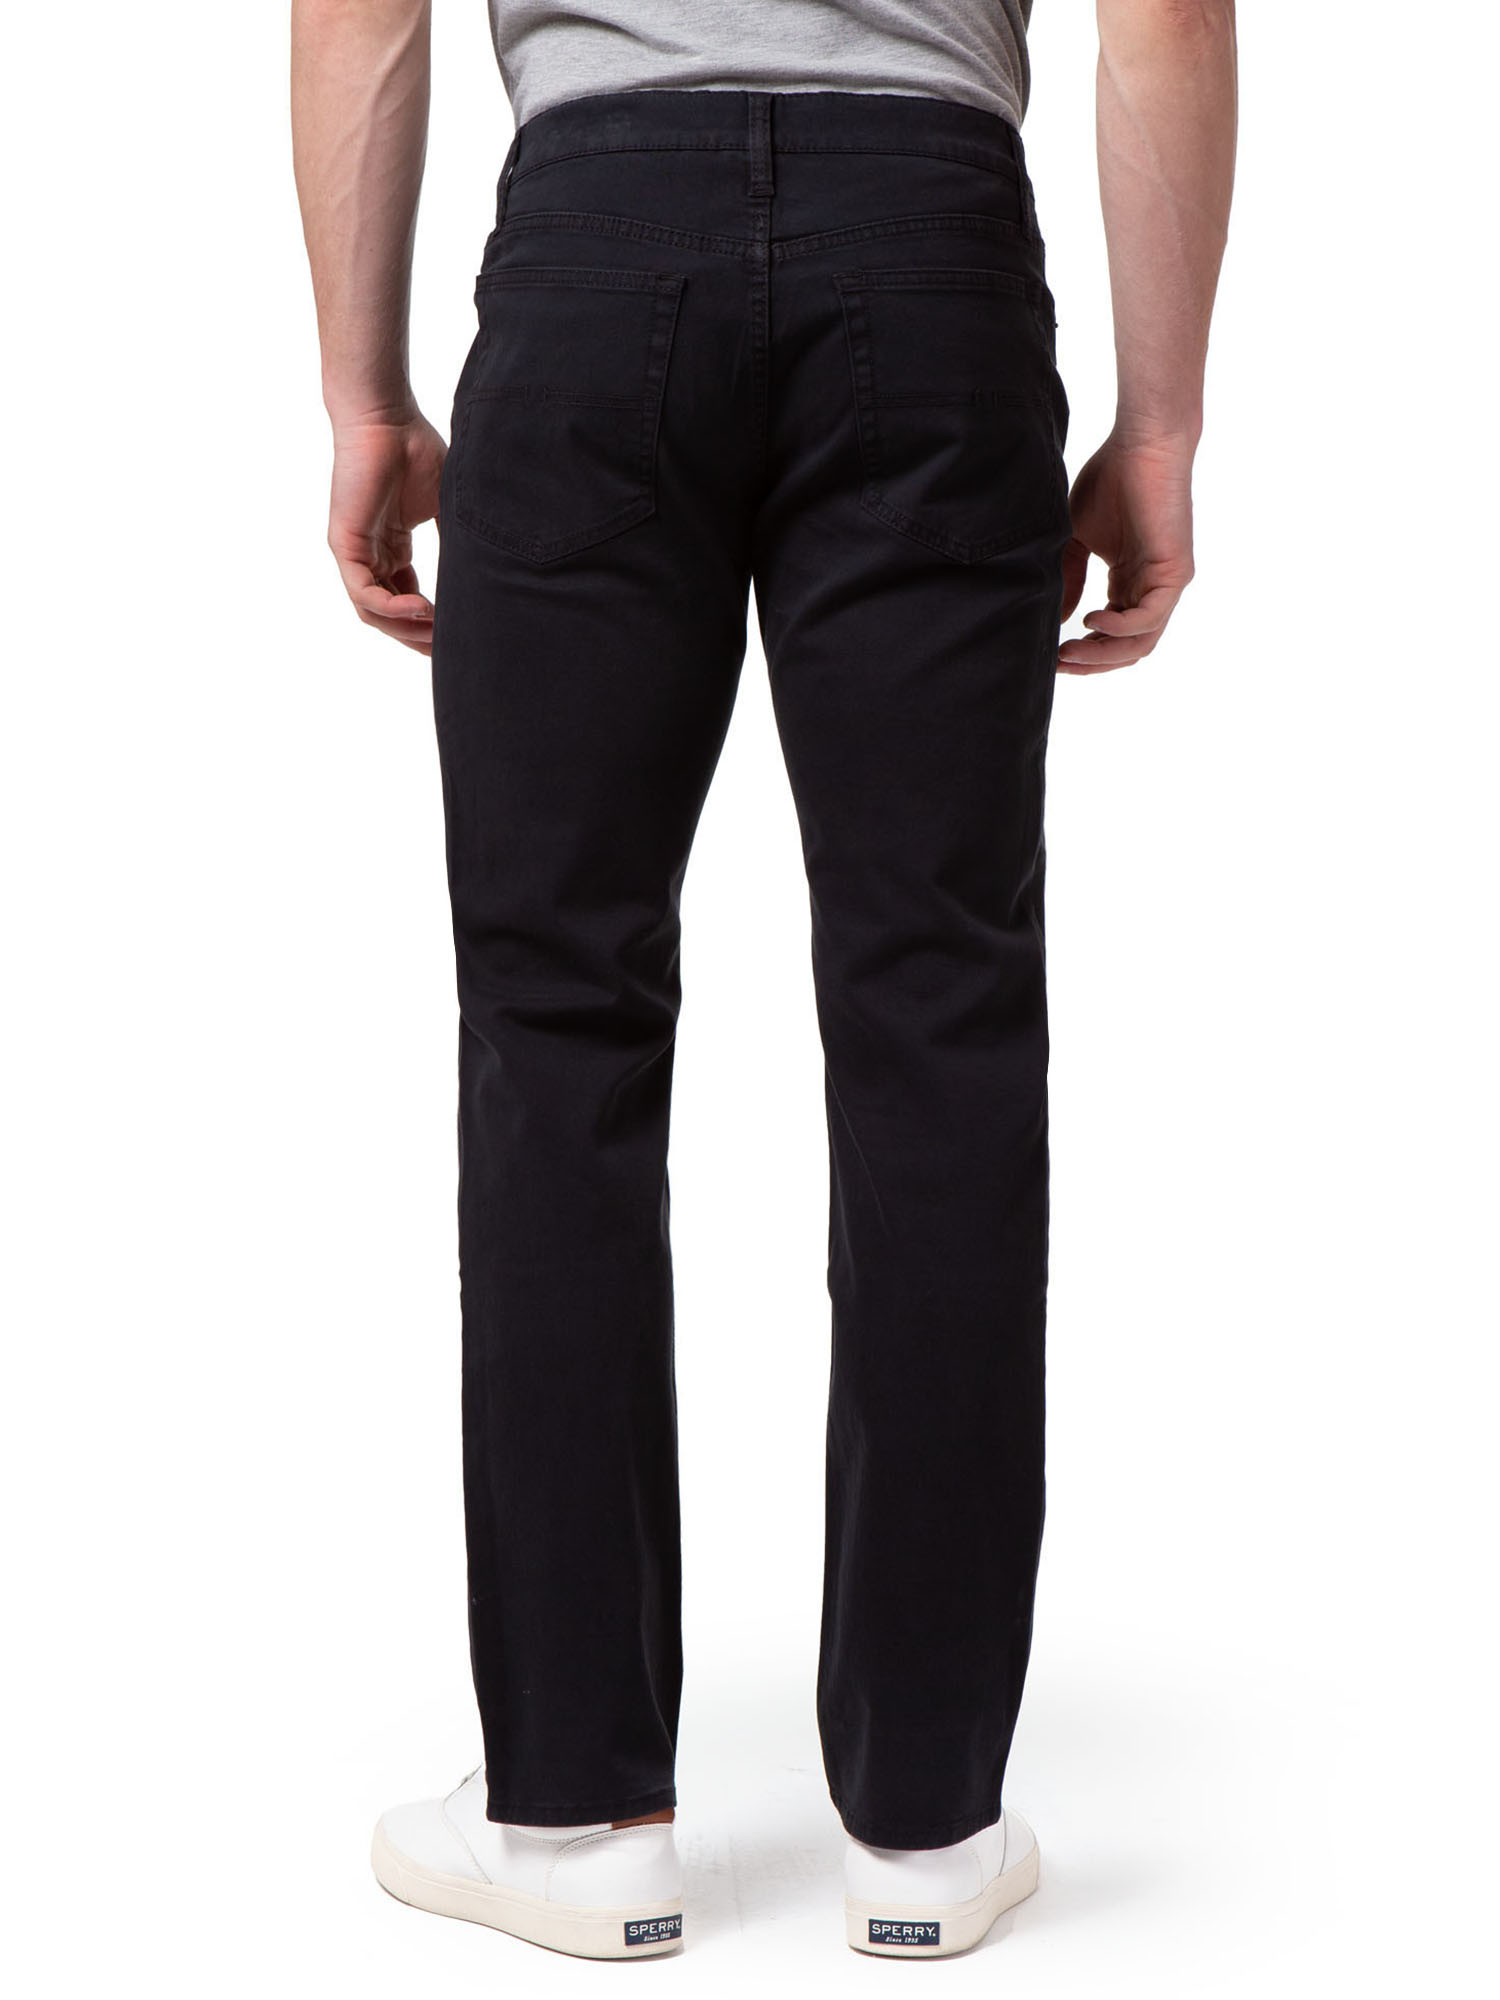 U.S. Polo Assn. Men's Slim Straight Stretch Twill 5 Pocket Pants - image 2 of 4